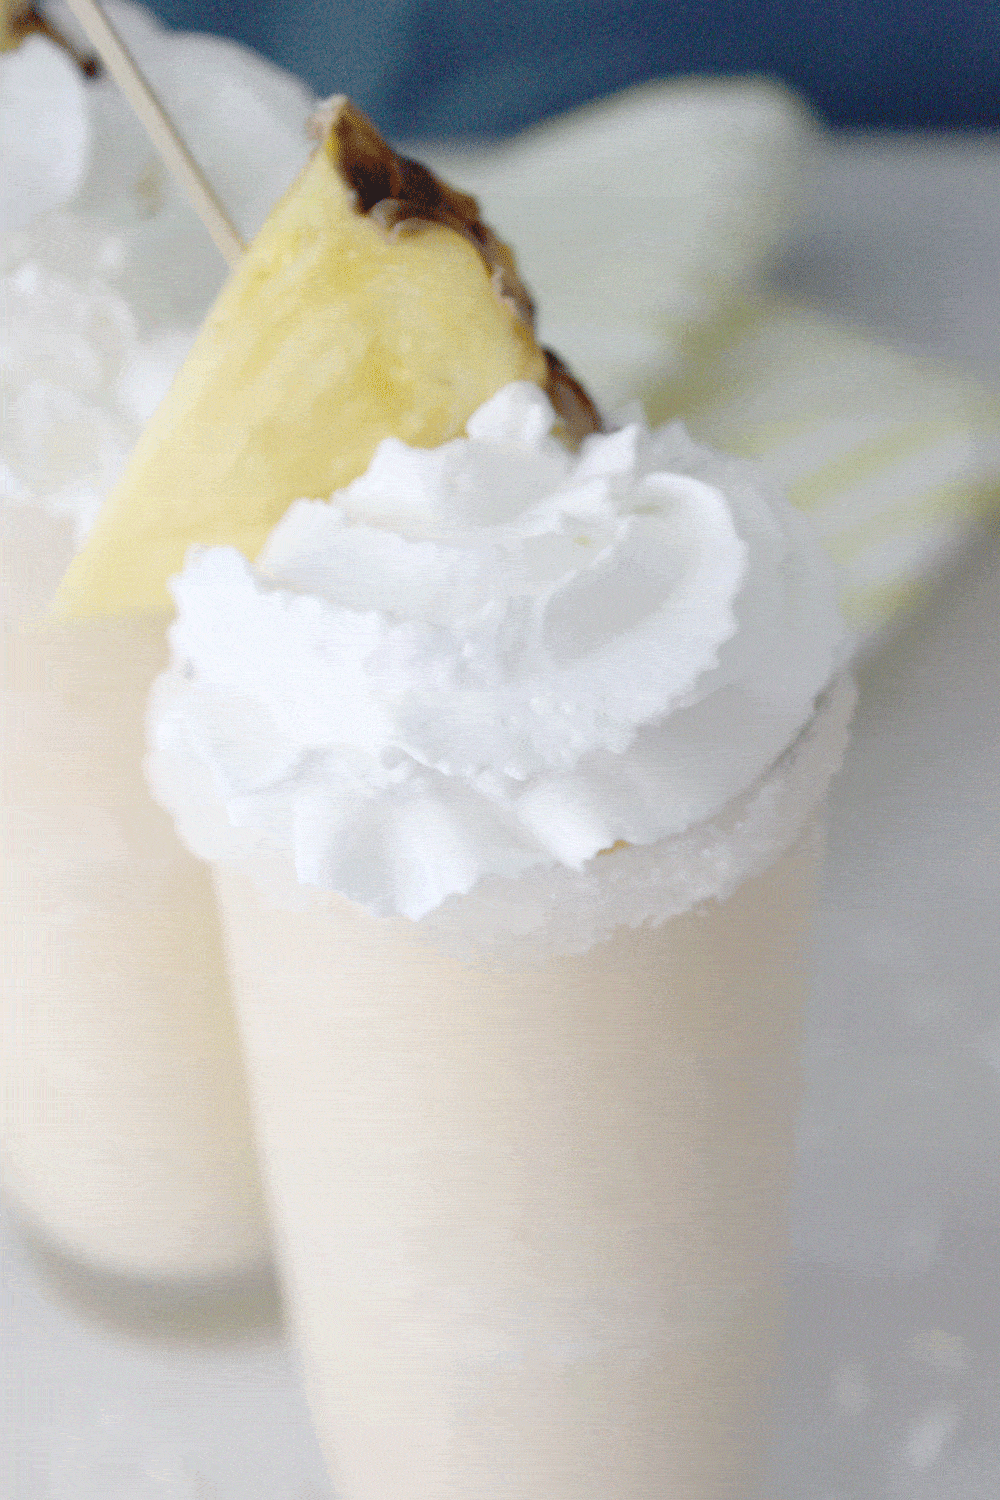 skinny pina colada slush topped with whip cream and pineapple 